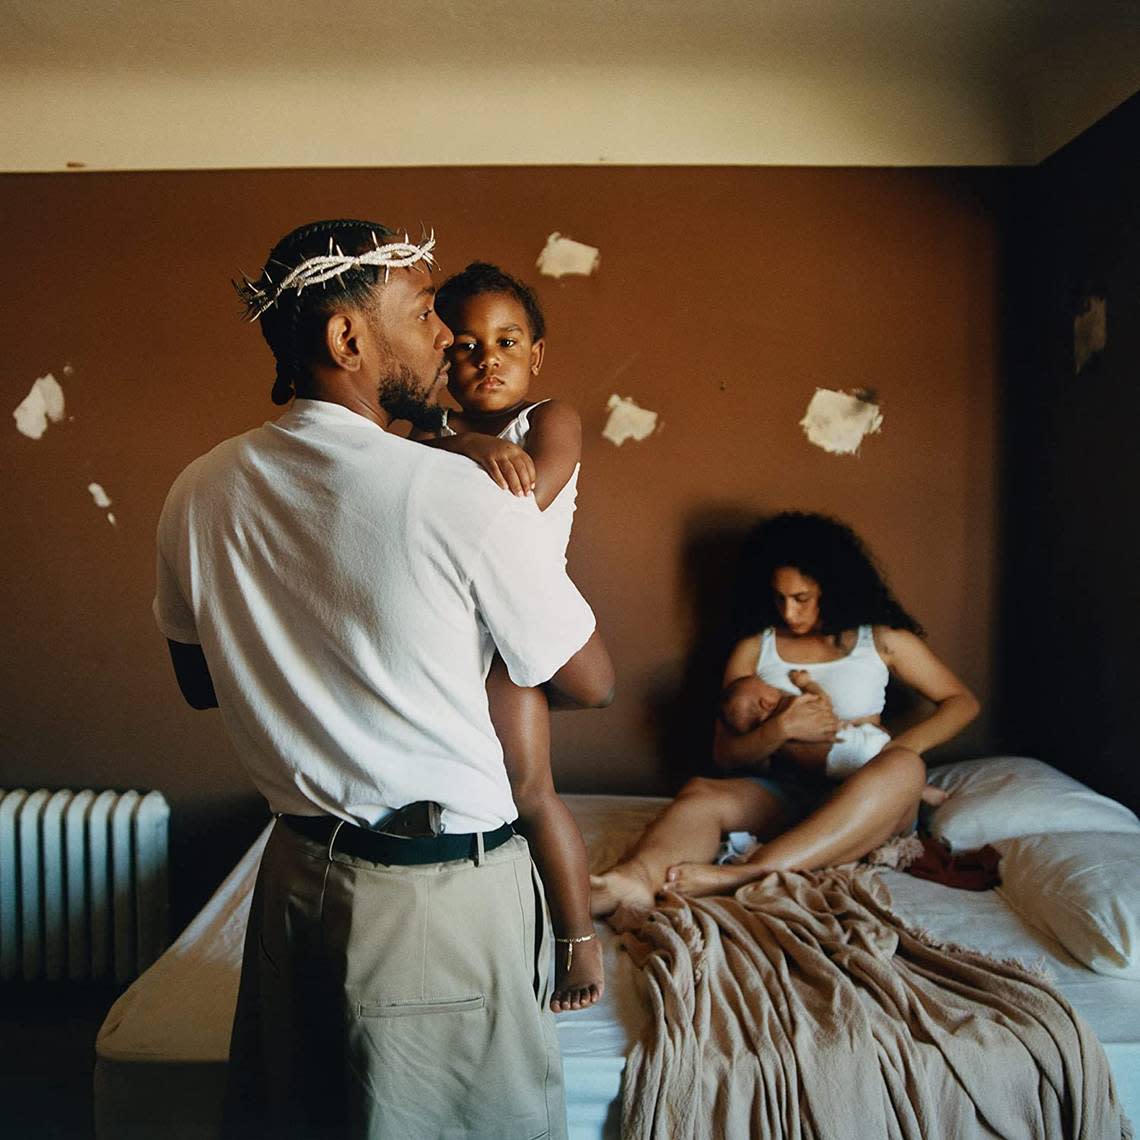 Kendrick Lamar – “Mr. Morale & The Big Steppers”